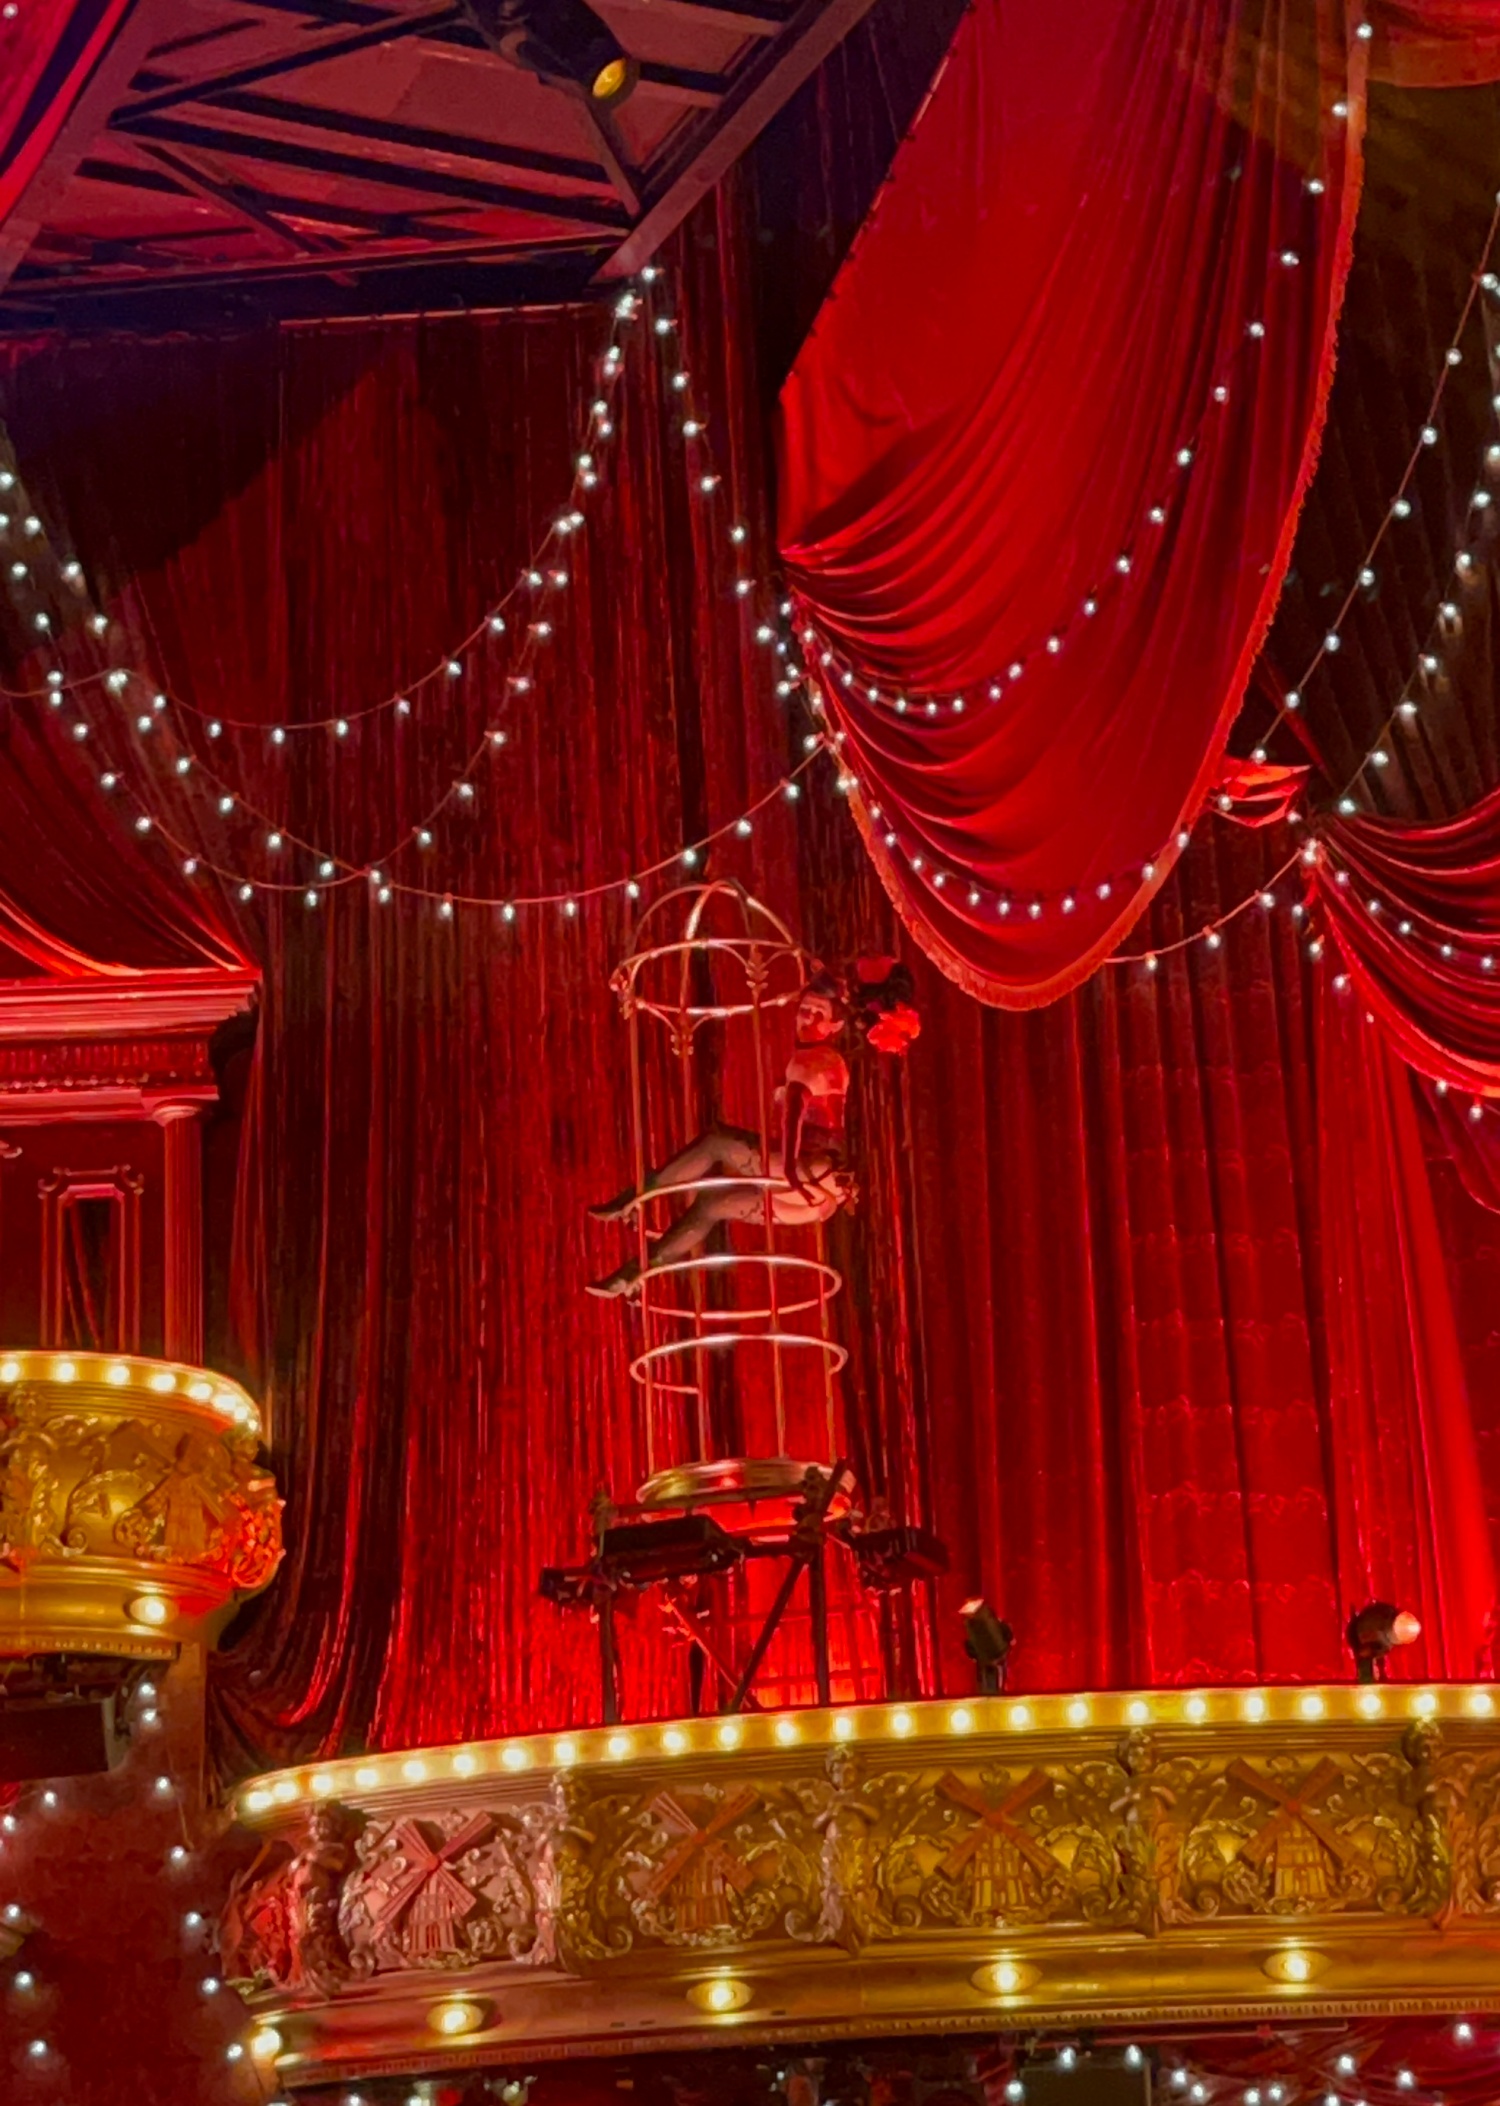 Köln: Moulin Rouge Musical